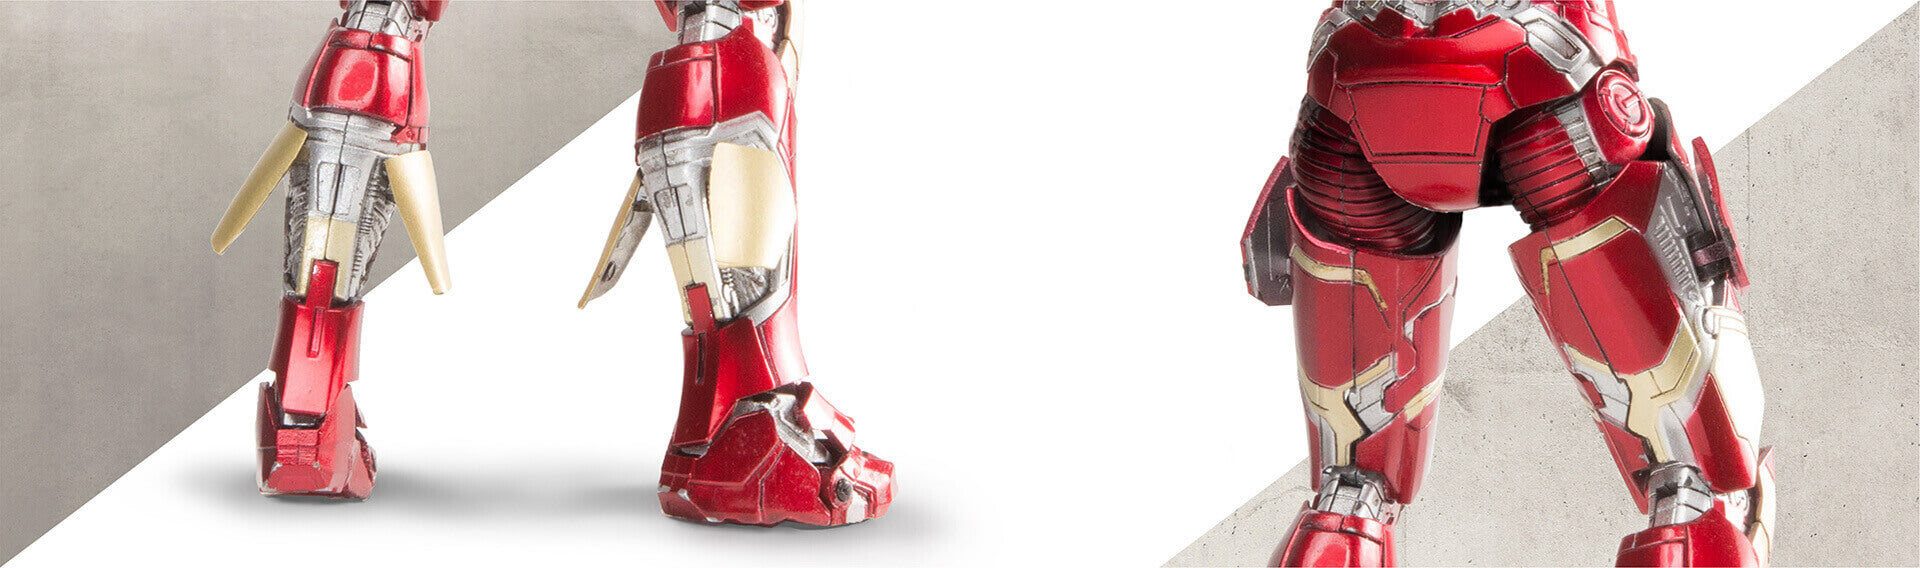 Comicave Studios - Omni Class: 1/12 Scale - Avengers: Age of Ultron - Iron Man Mark XLIII - Marvelous Toys